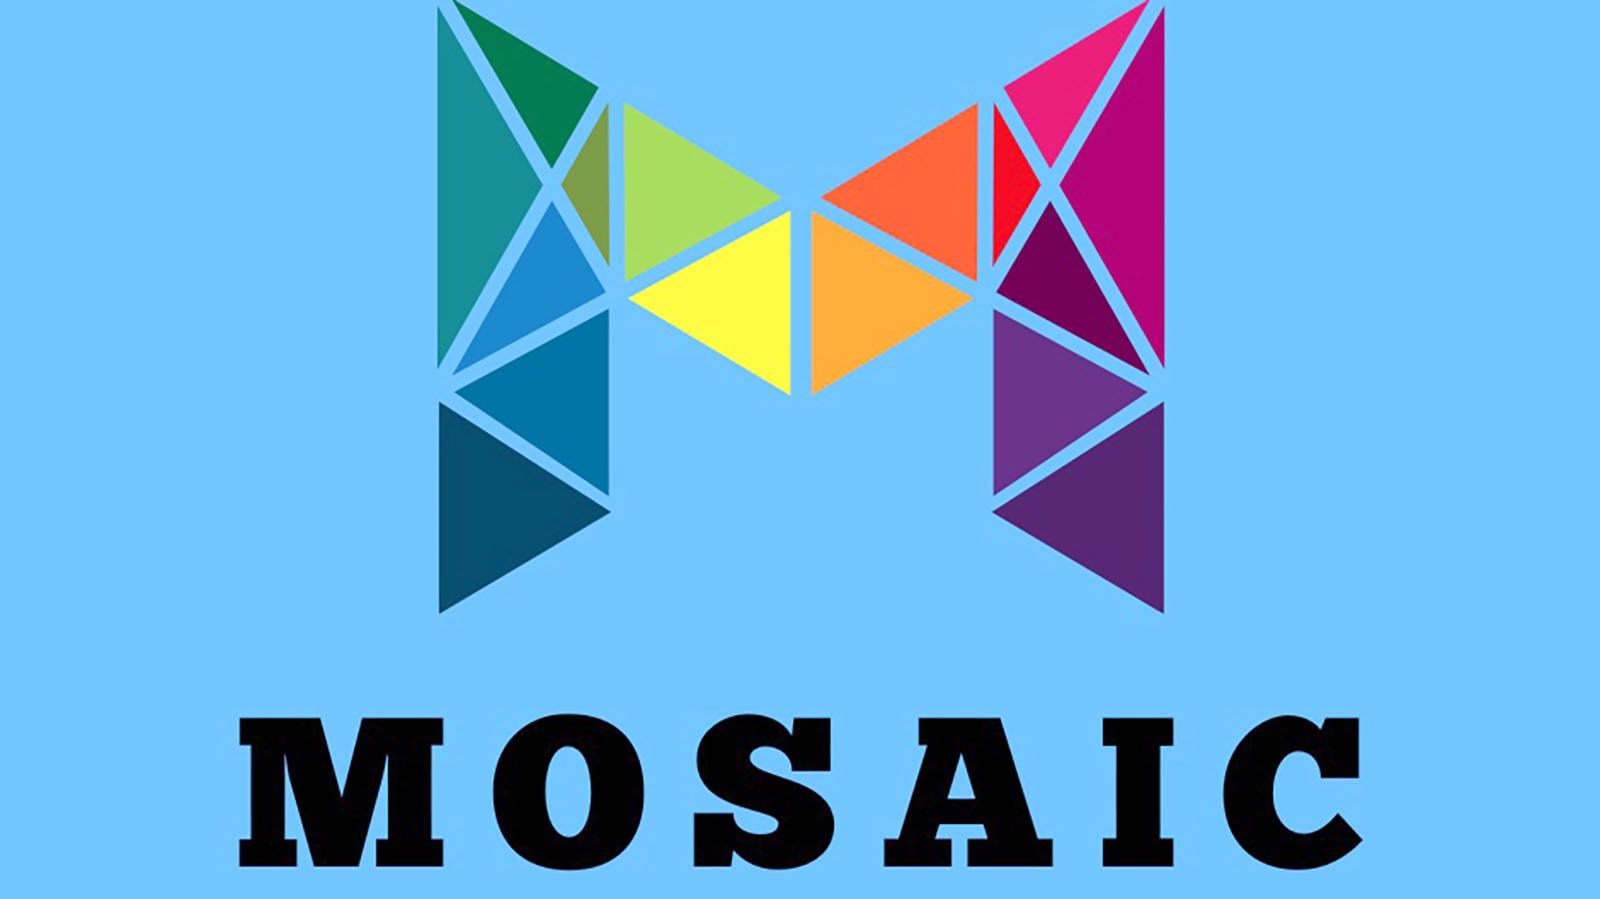 Wunderkammer Company will host Mosaic Market on Oct. 9.